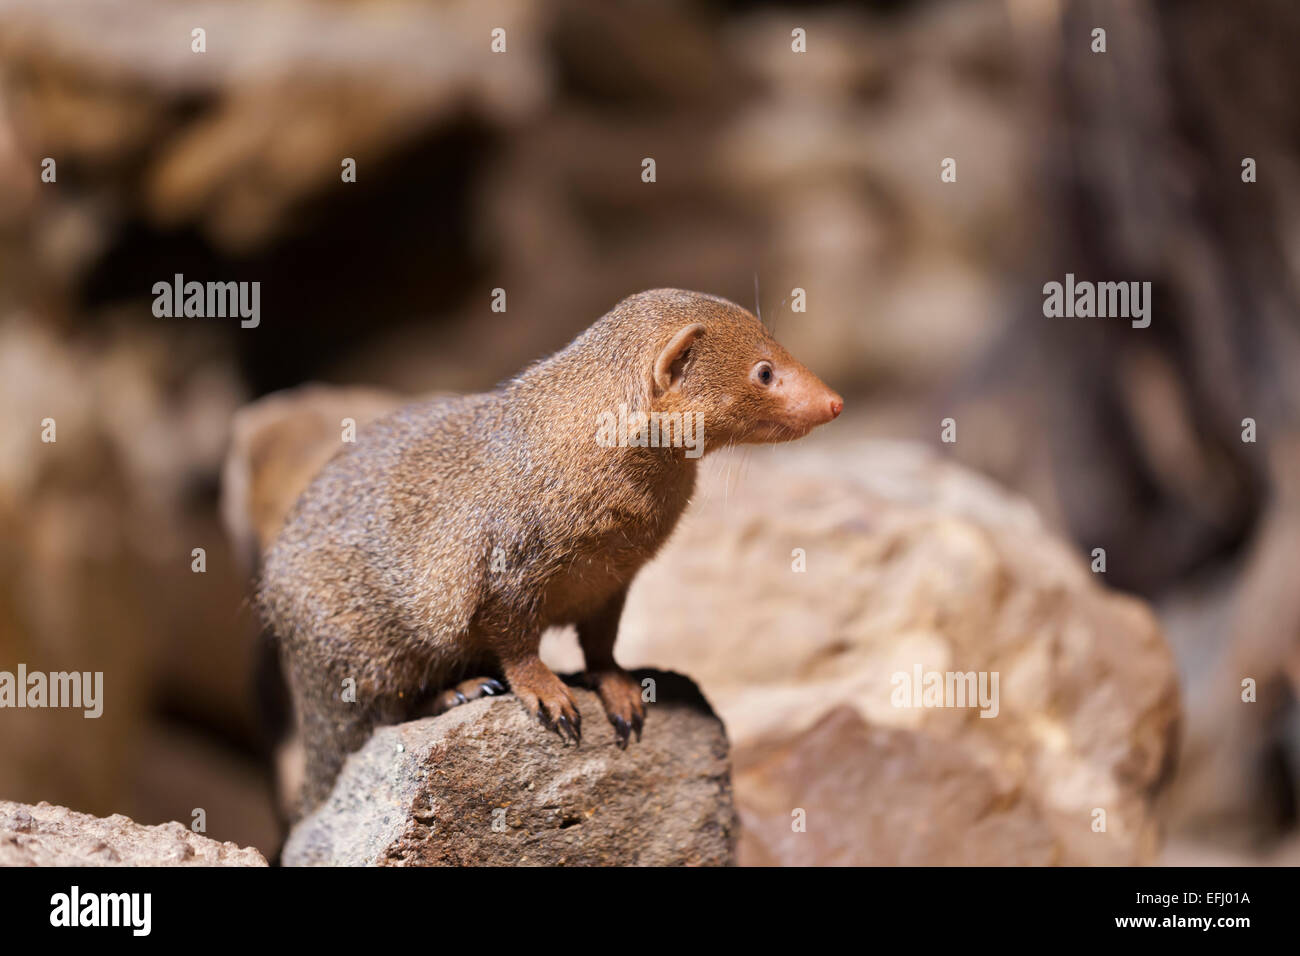 Whipsnade zoo : wildlife - Common dwarf mongoose (Helogale parvula). Stock Photo